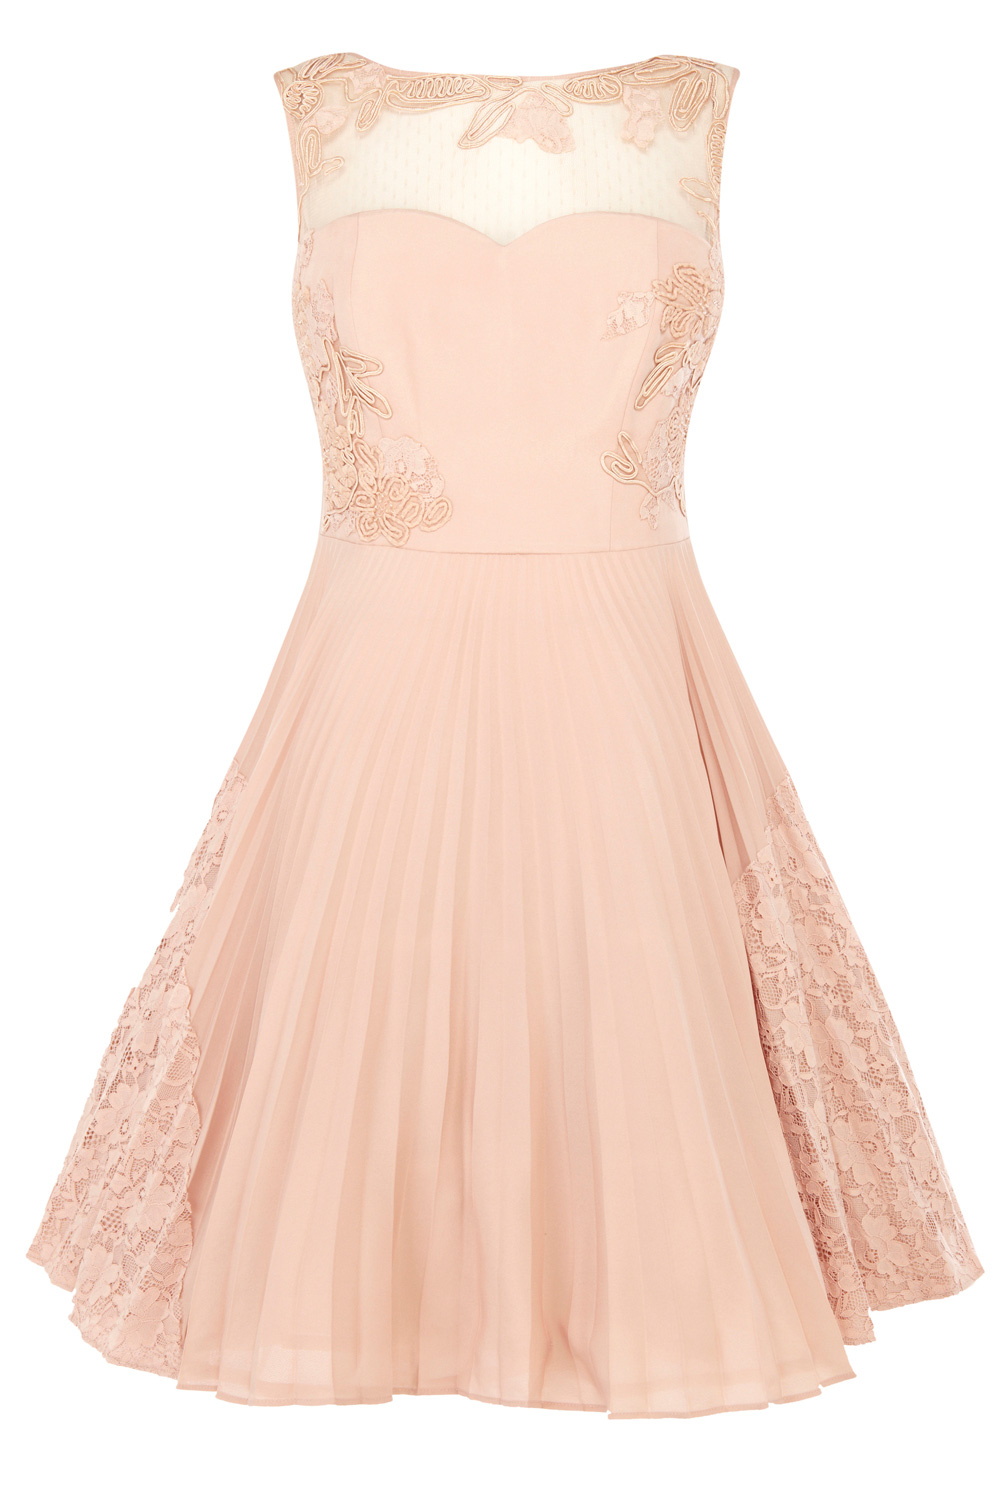 Lyst - Coast Aloisa Dress in Pink